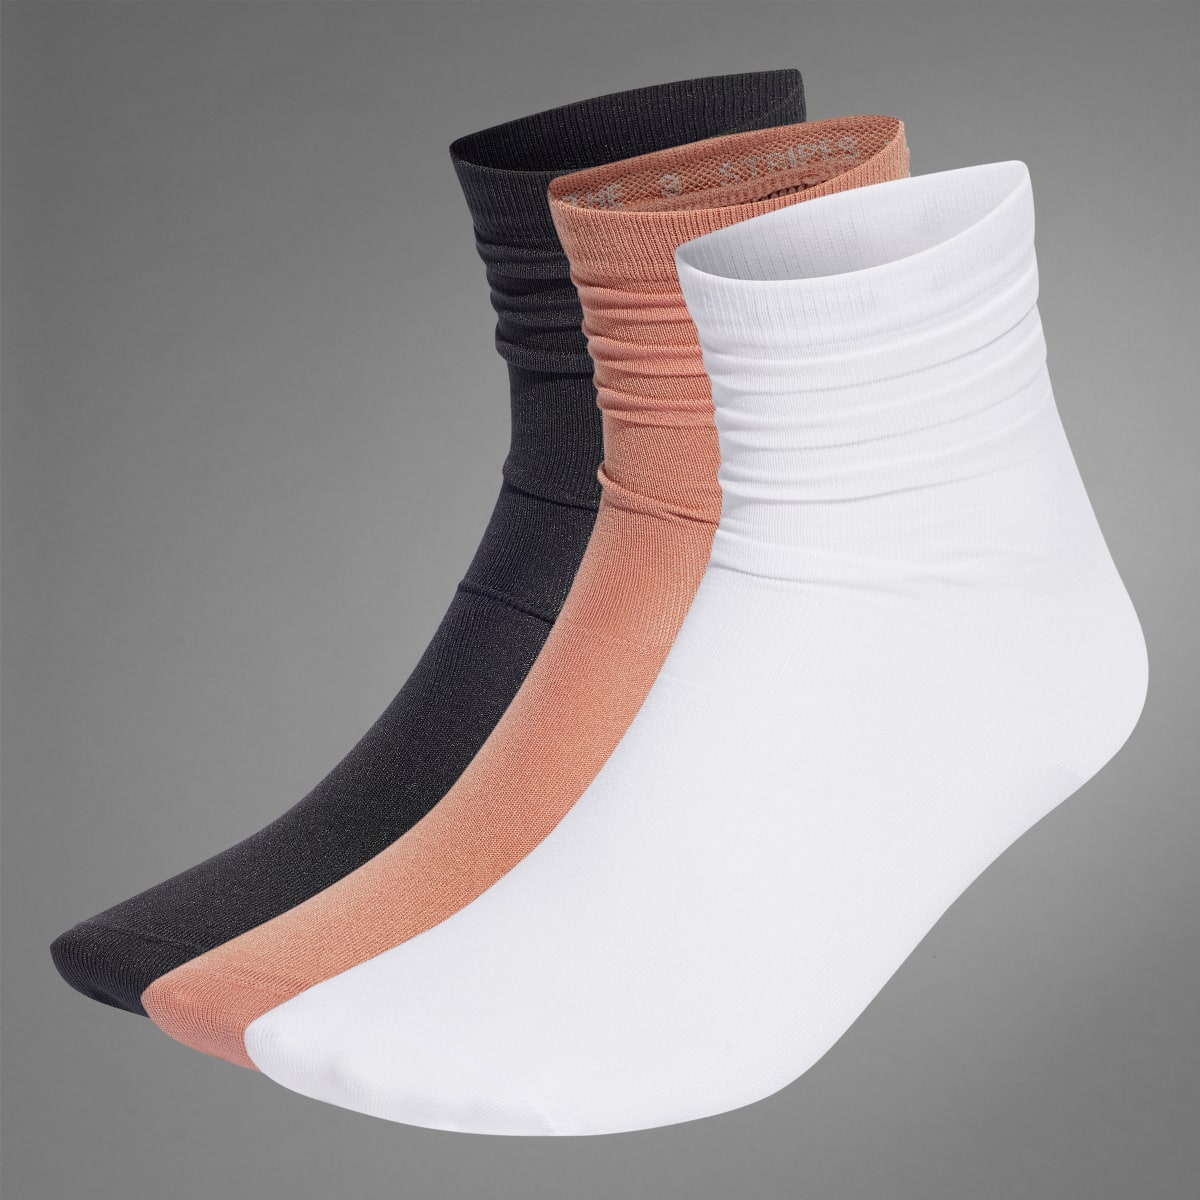 Adidas Collective Power Mid-Cut Bilekli Çorap - 3 Çift. 8